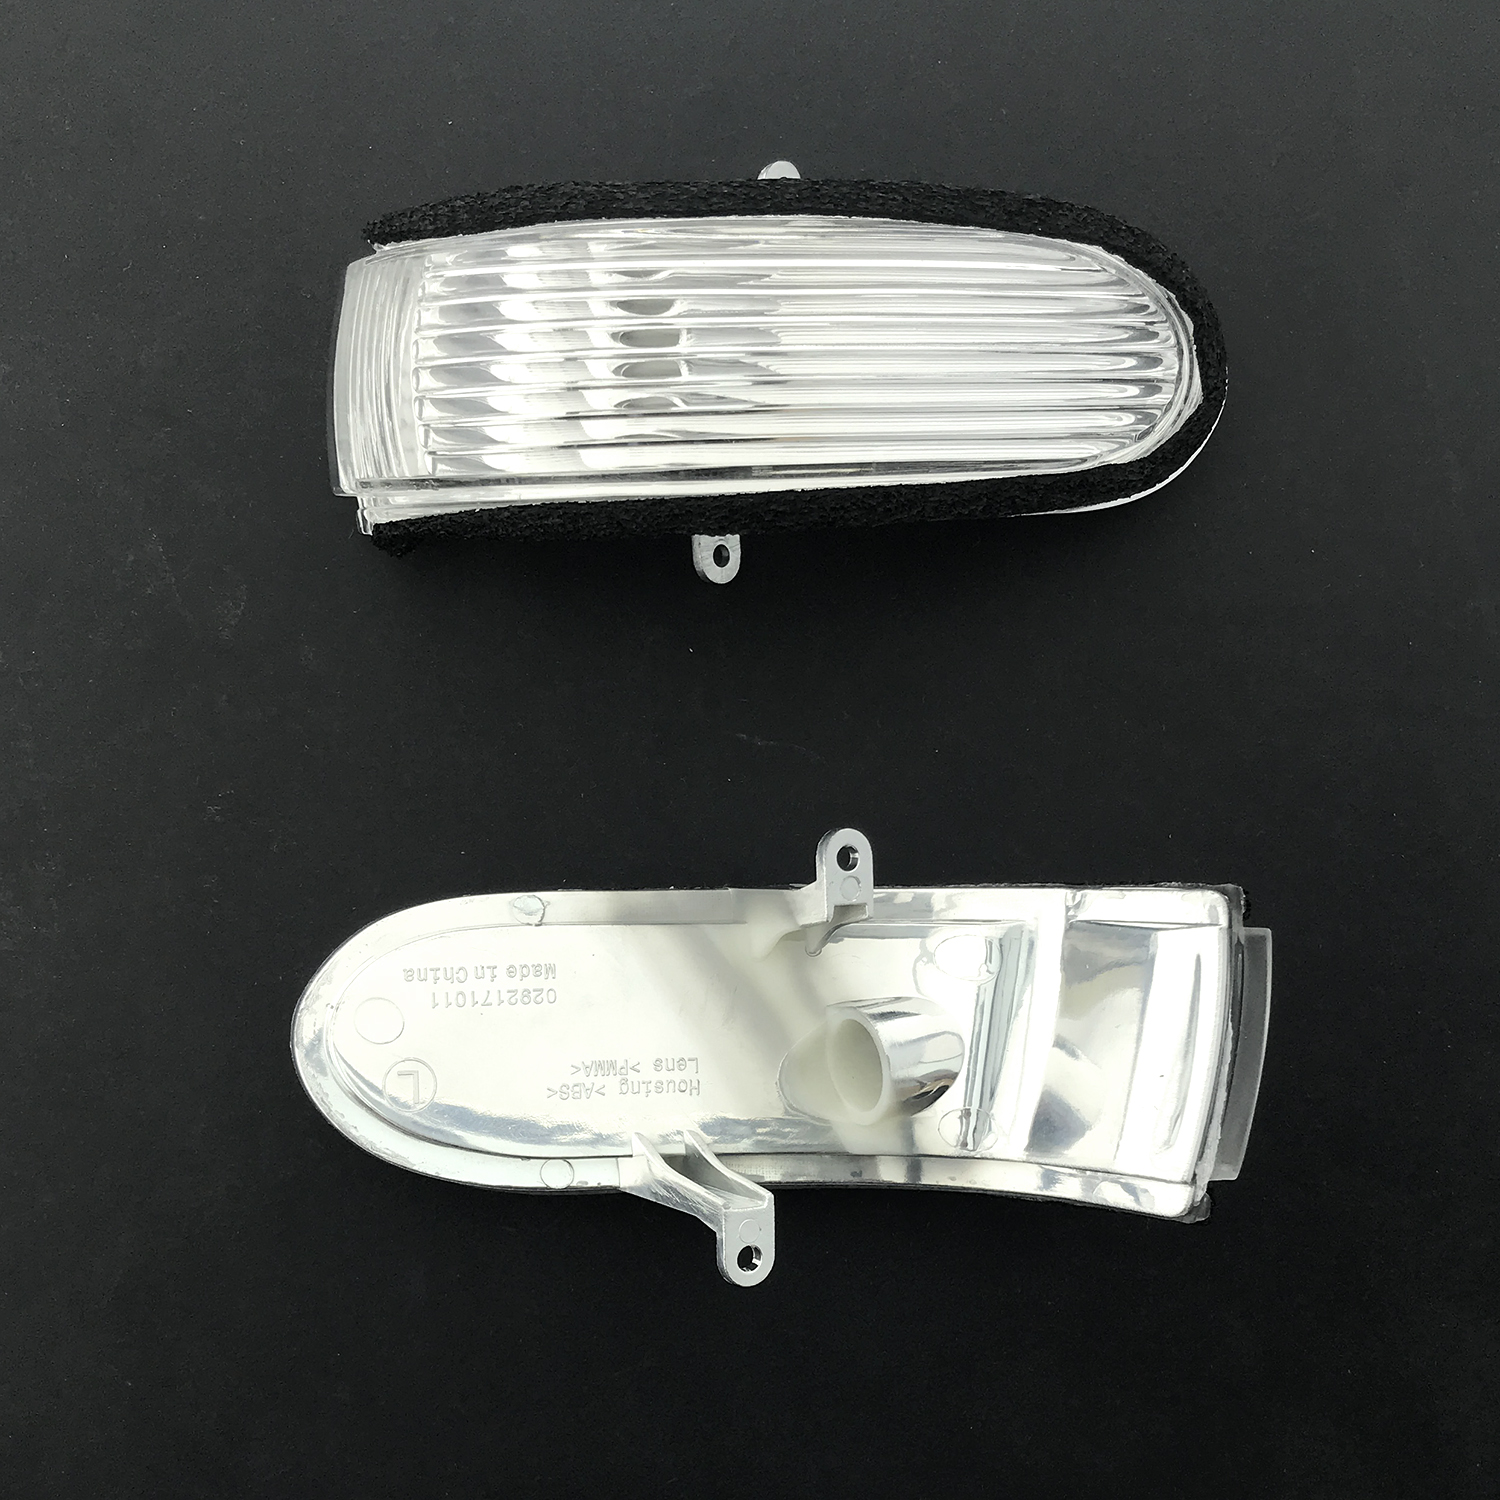 KIA Ceed Wing Mirror Indicator RIGHT HAND ( UK DRIVER Side ) 2009 to 2011 – Wing Mirror Indicator Lens